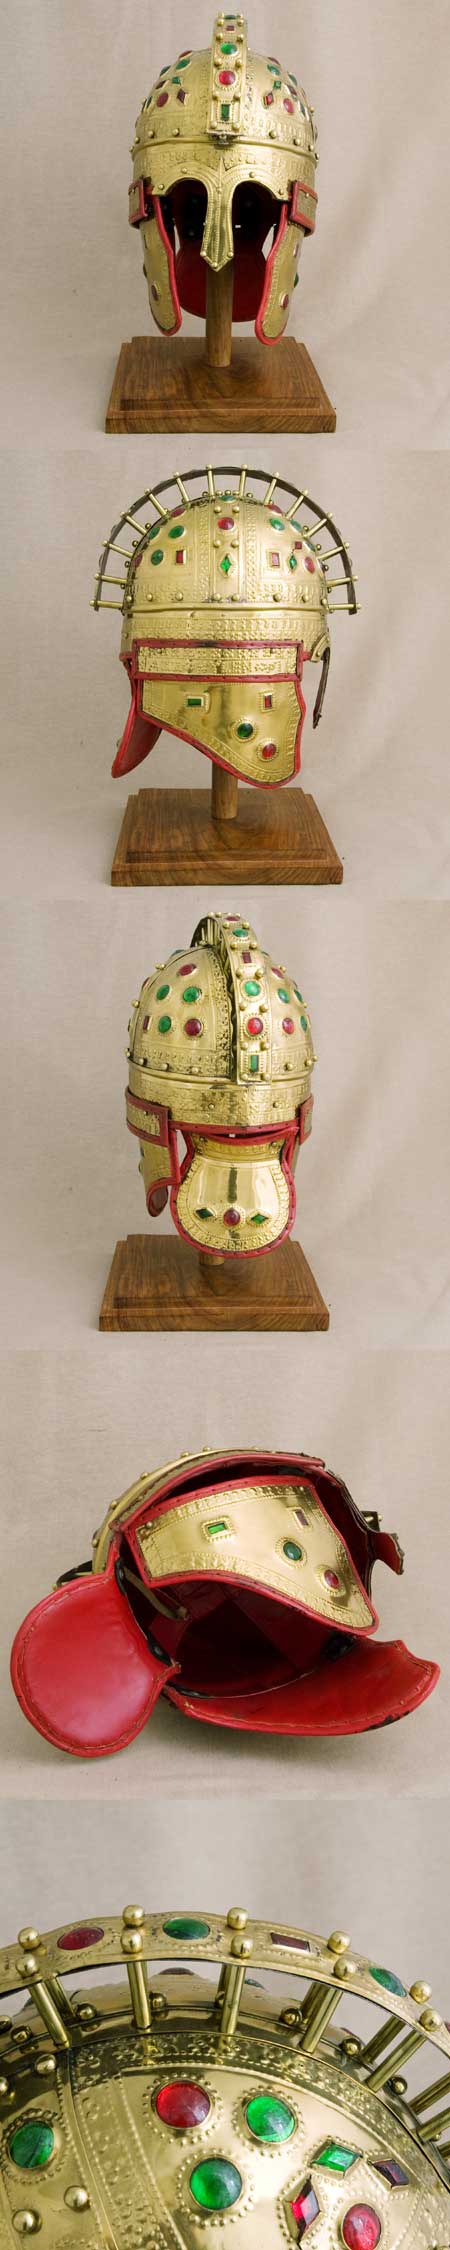 Late Roman Officer's Jeweled Helmet, Berkasovo